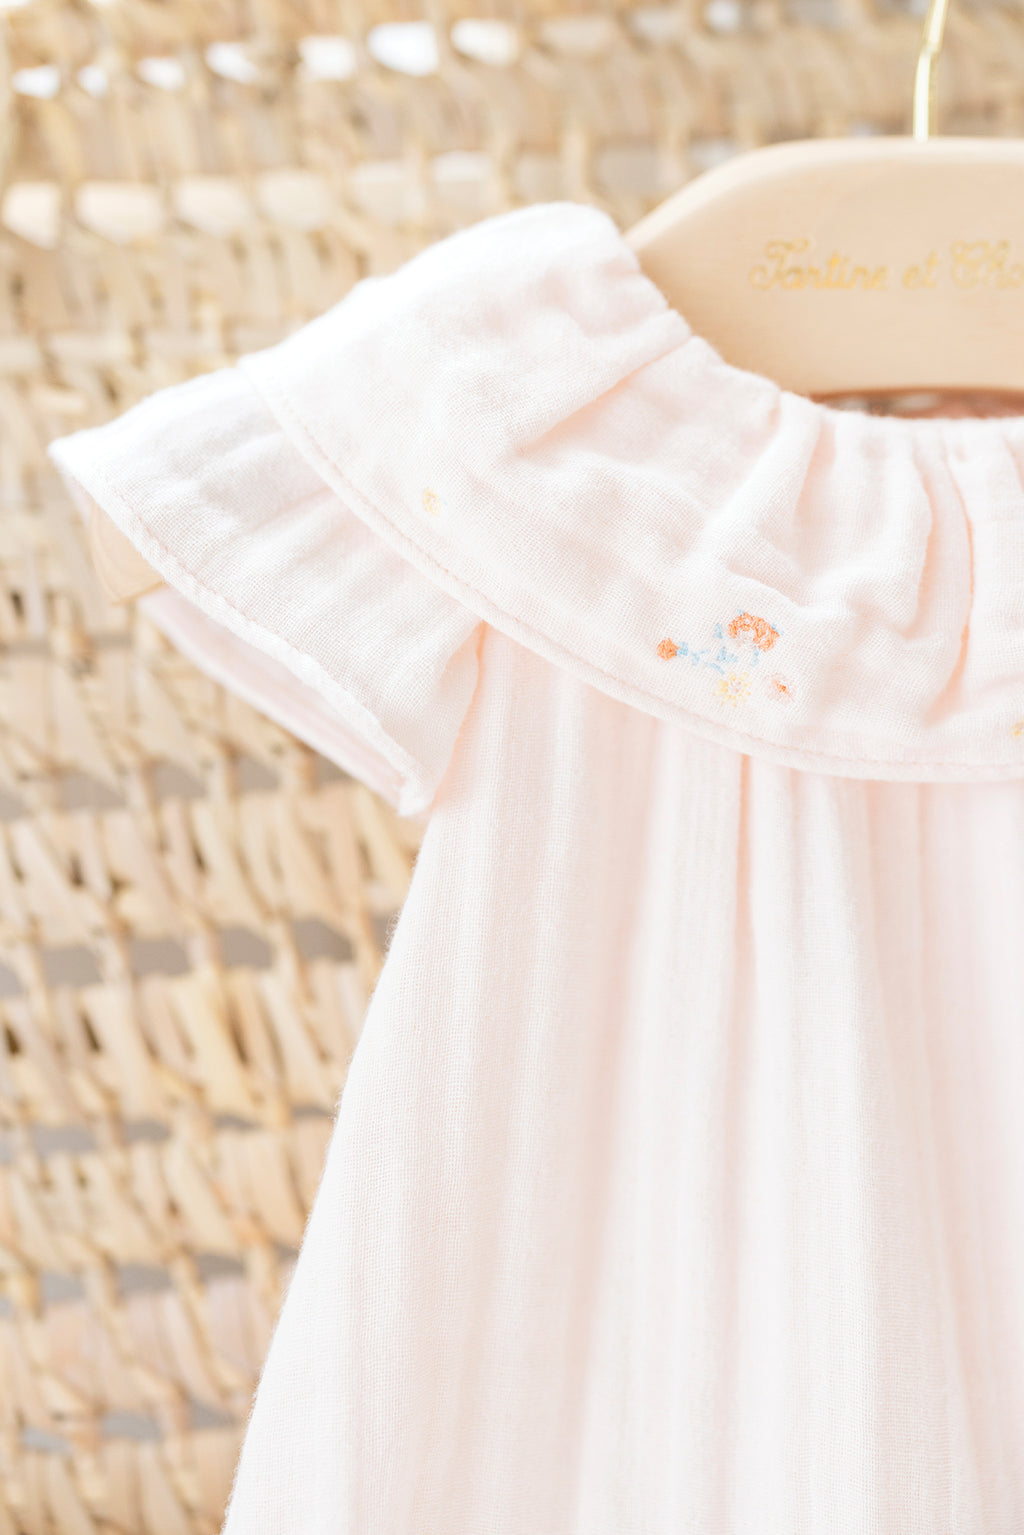 Jumpsuit short - Pale pink cotton gauze Embroidered